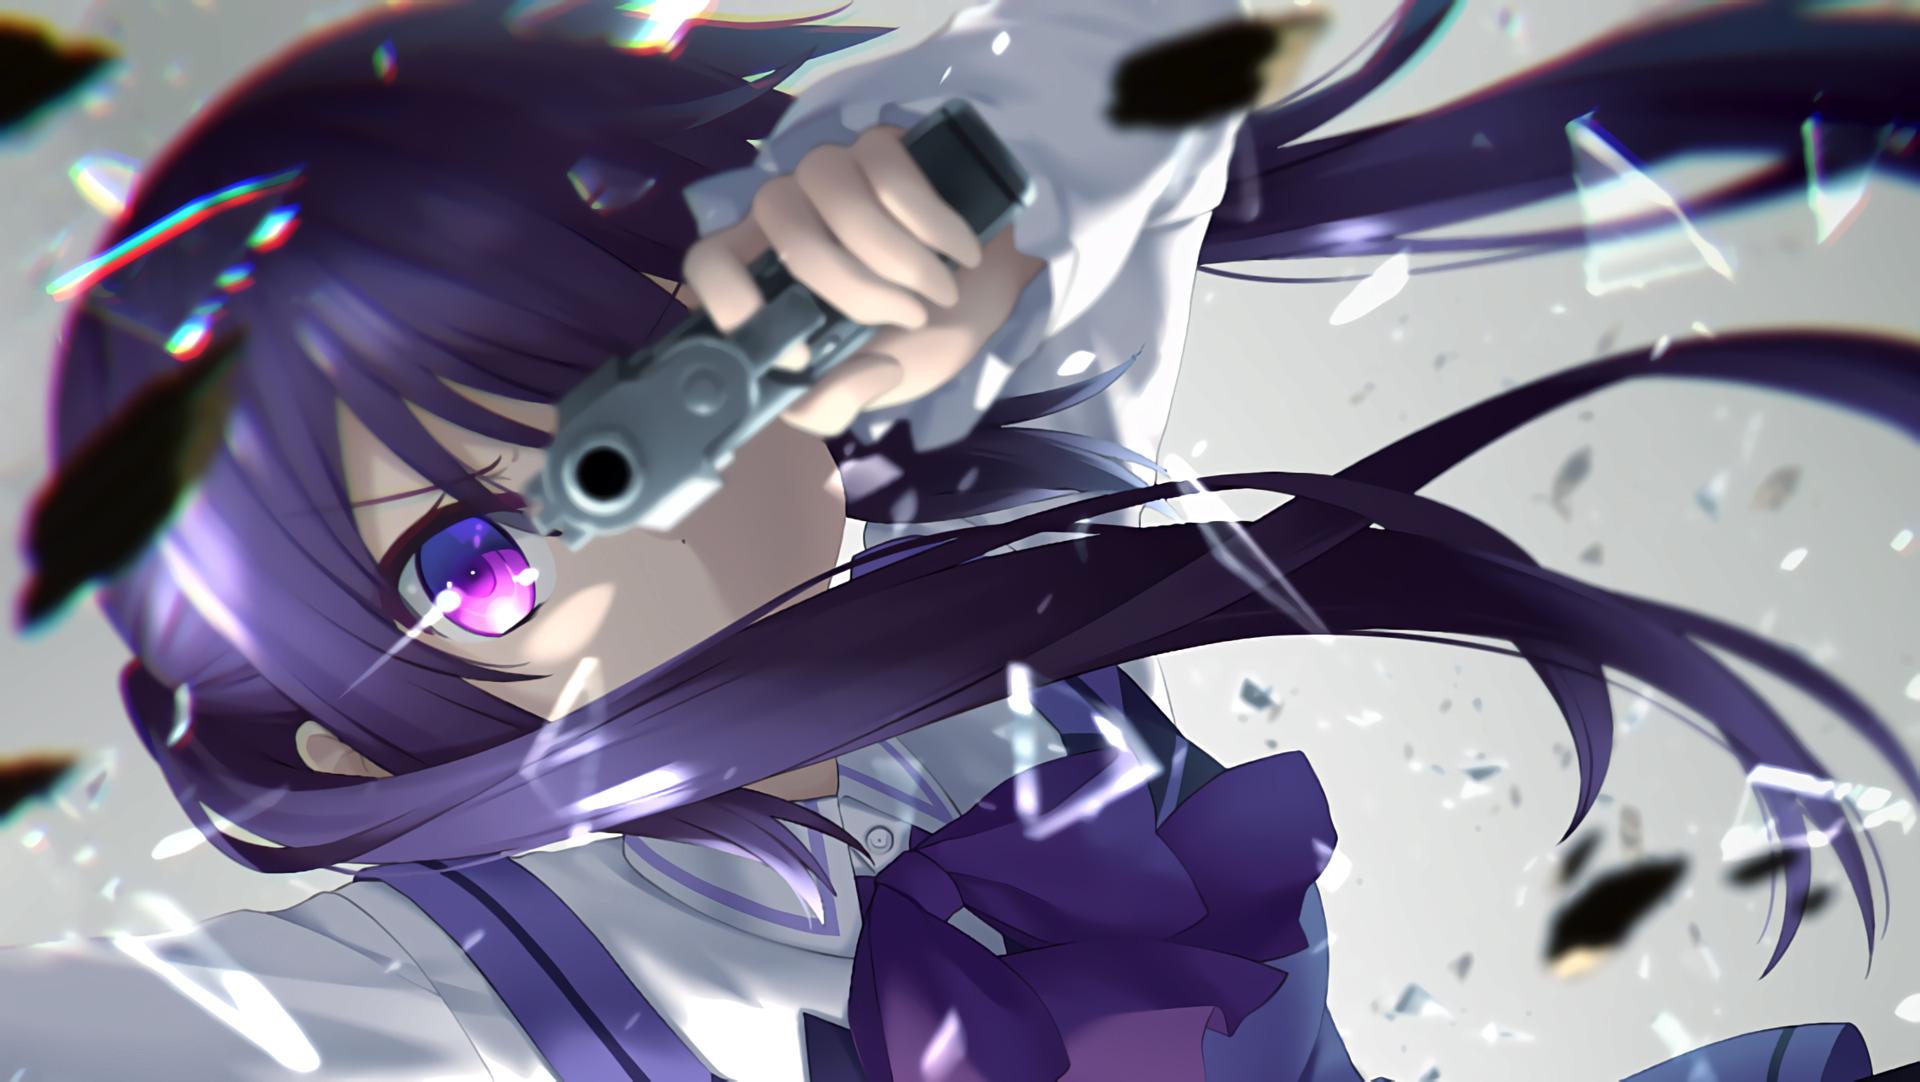 HD wallpaper: woman with purple hair anime wallpaper, pani poni dash,  kashiwagi yuum